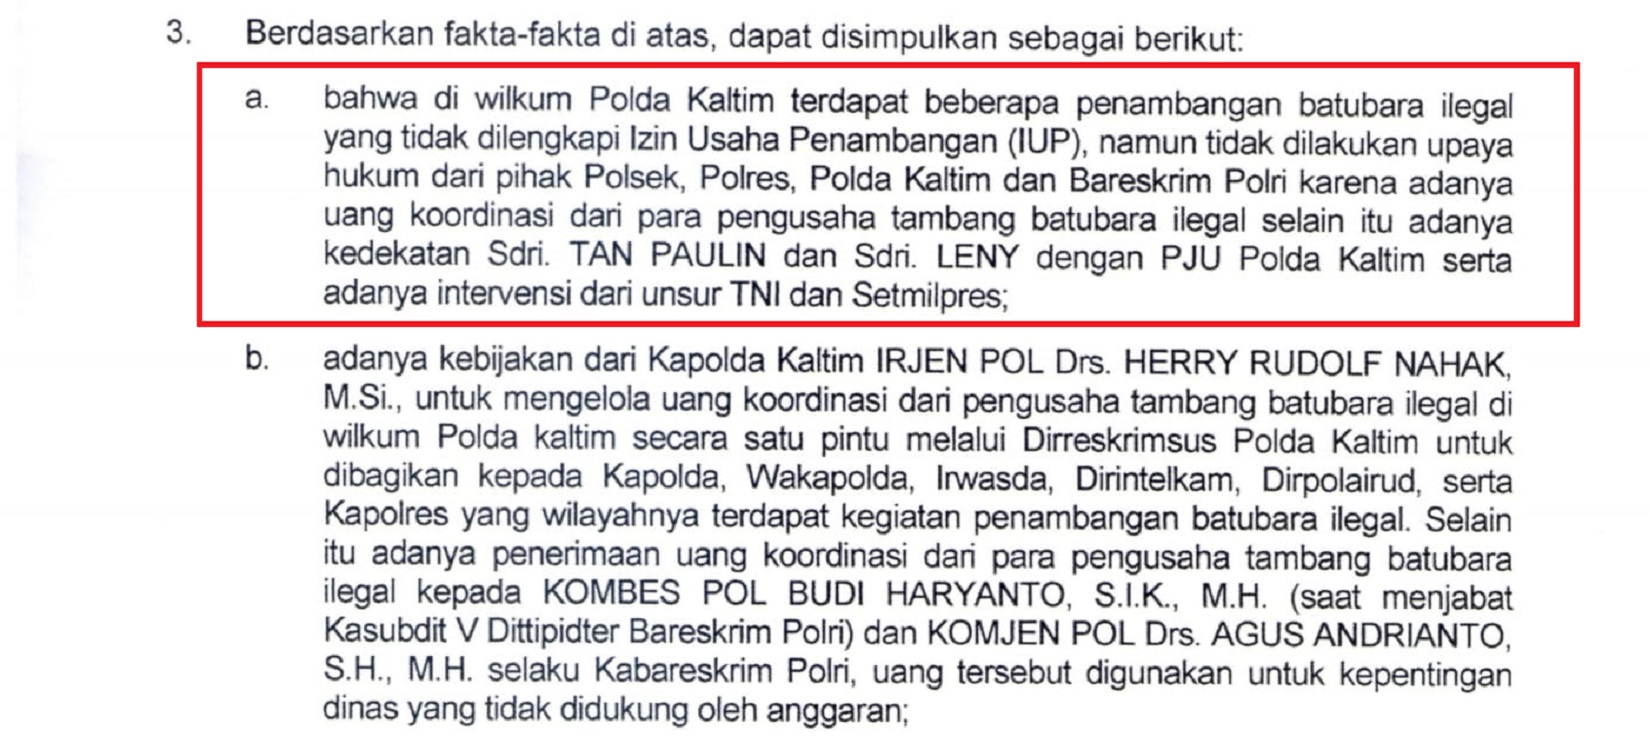 Beredar Isi Surat Divpropam 3: Tan Paulin - Leny Dekat dengan PJU Polda Kaltim, TNI dan Setmilpres Intervensi